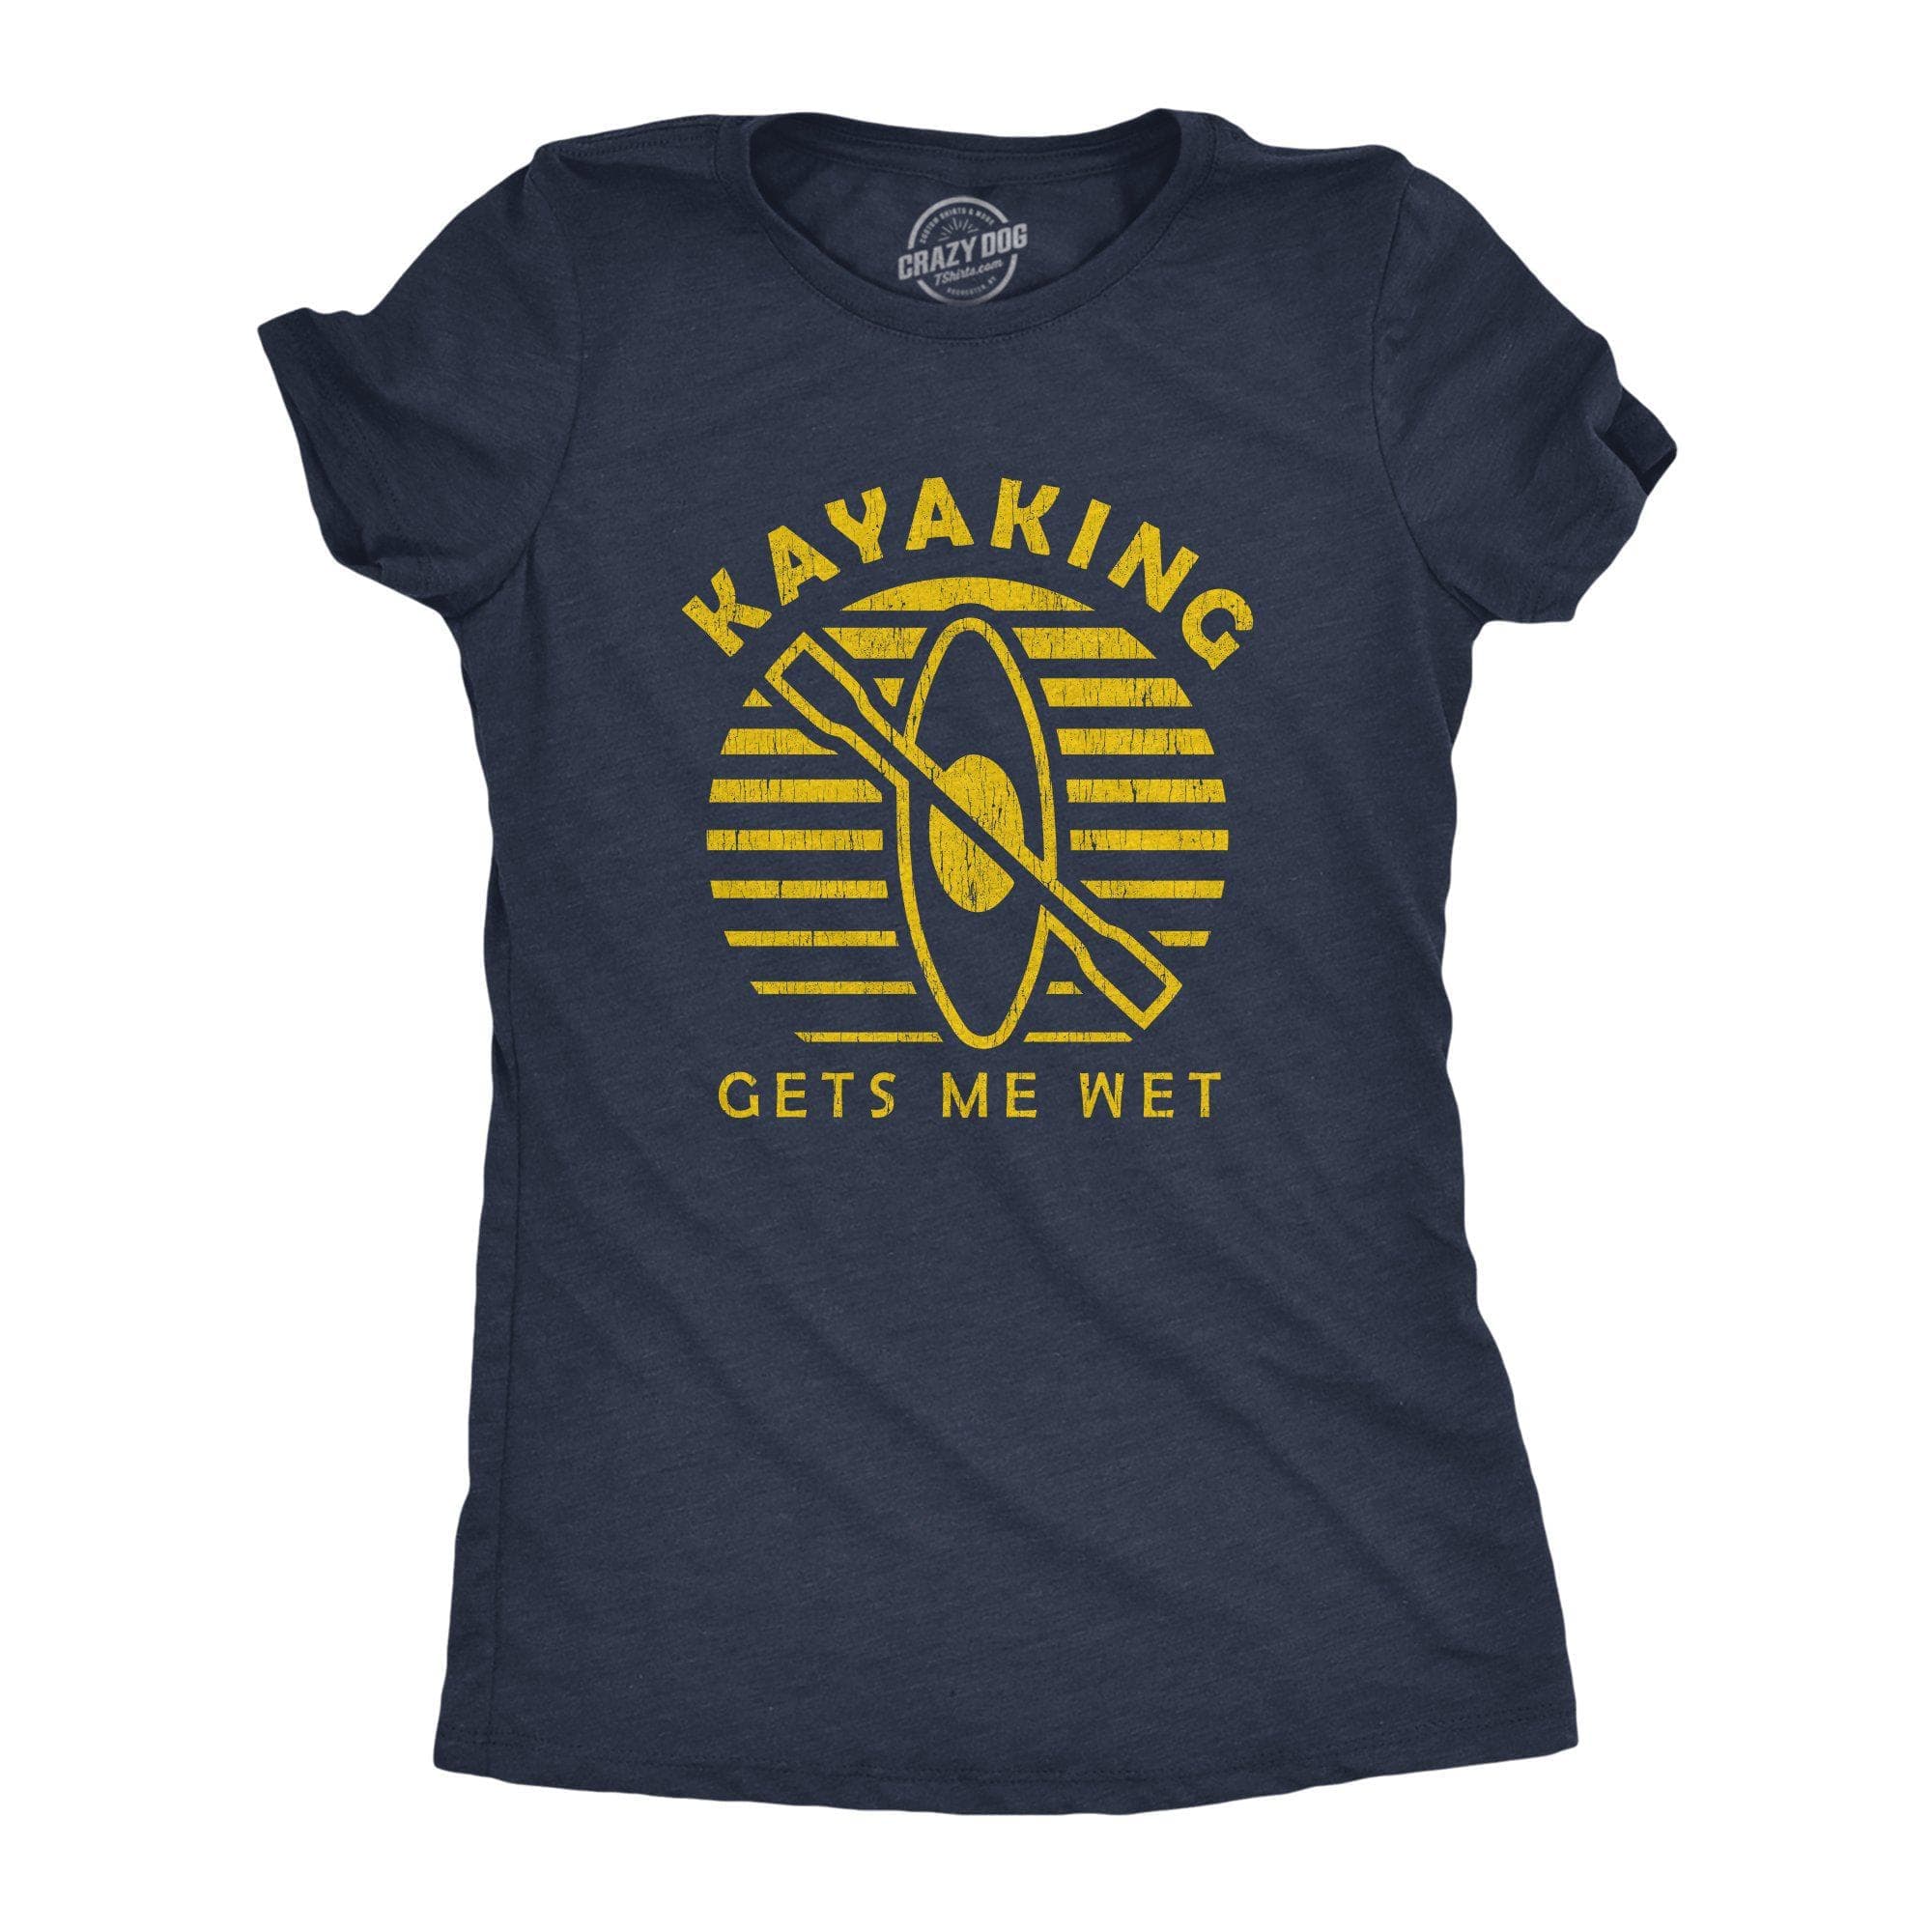 Kayaking Gets Me Wet Women's Tshirt - Crazy Dog T-Shirts